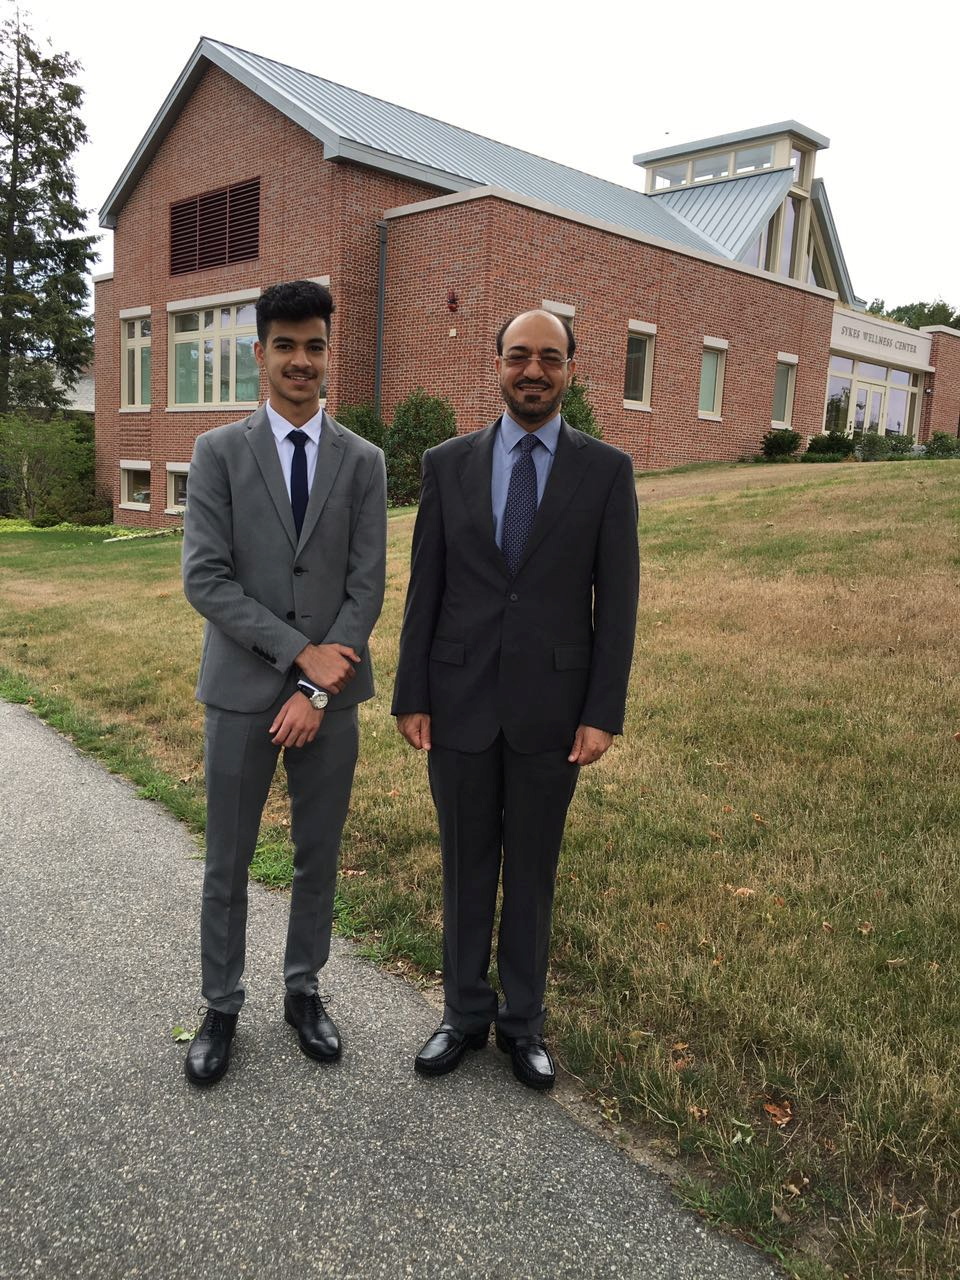 Former Saudi intelligence official Saad al-Jabri poses with his son Omar al-Jabri whilst visiting schools around Boston, U.S.